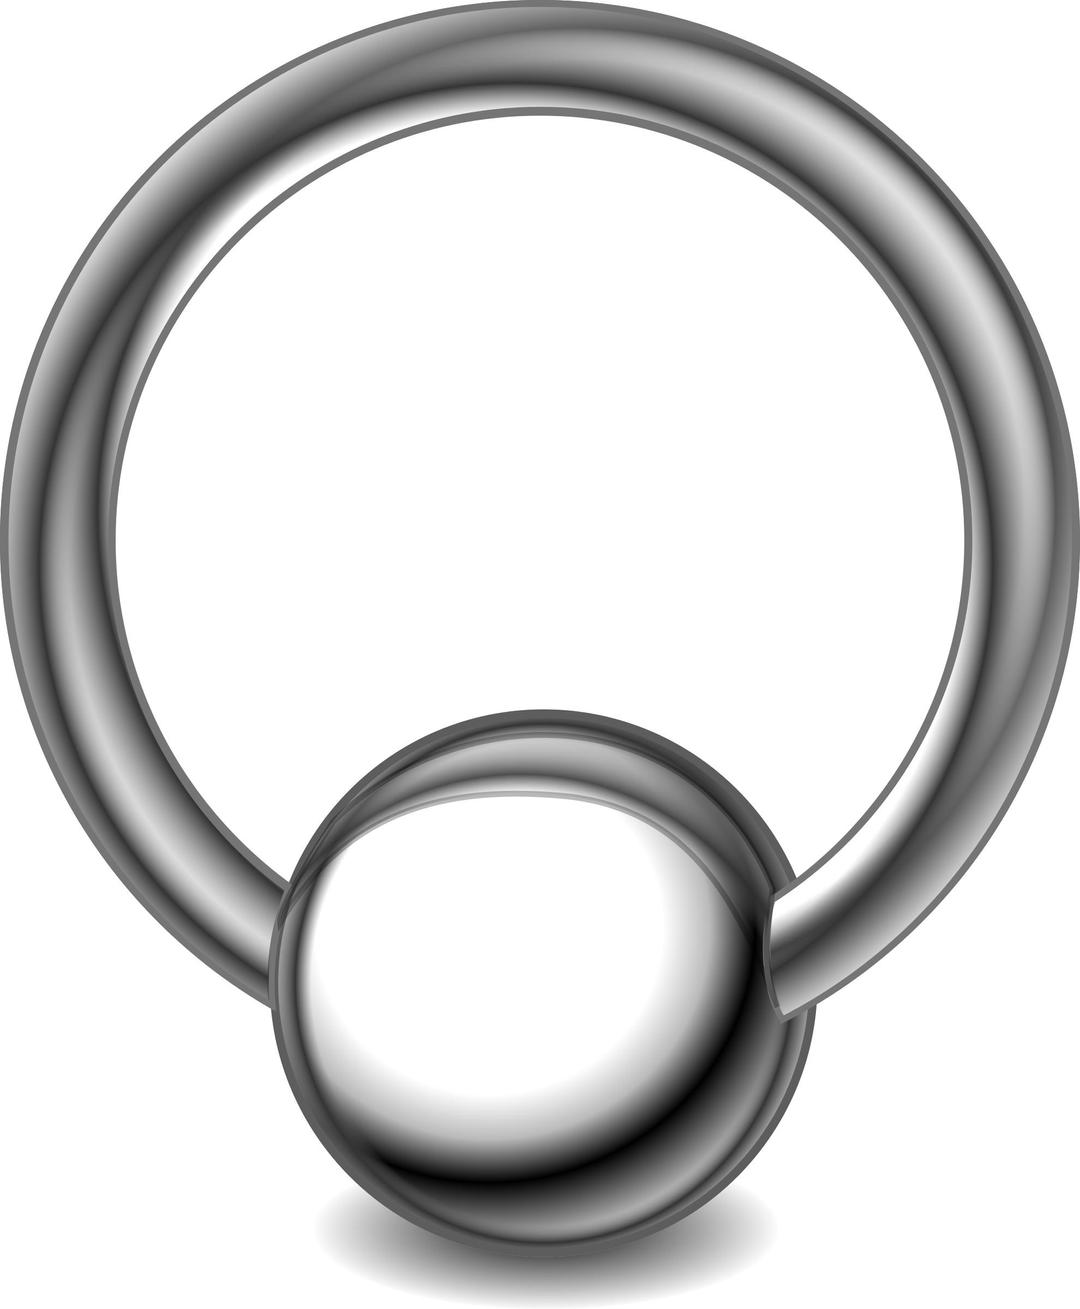 piercing-ring png transparent